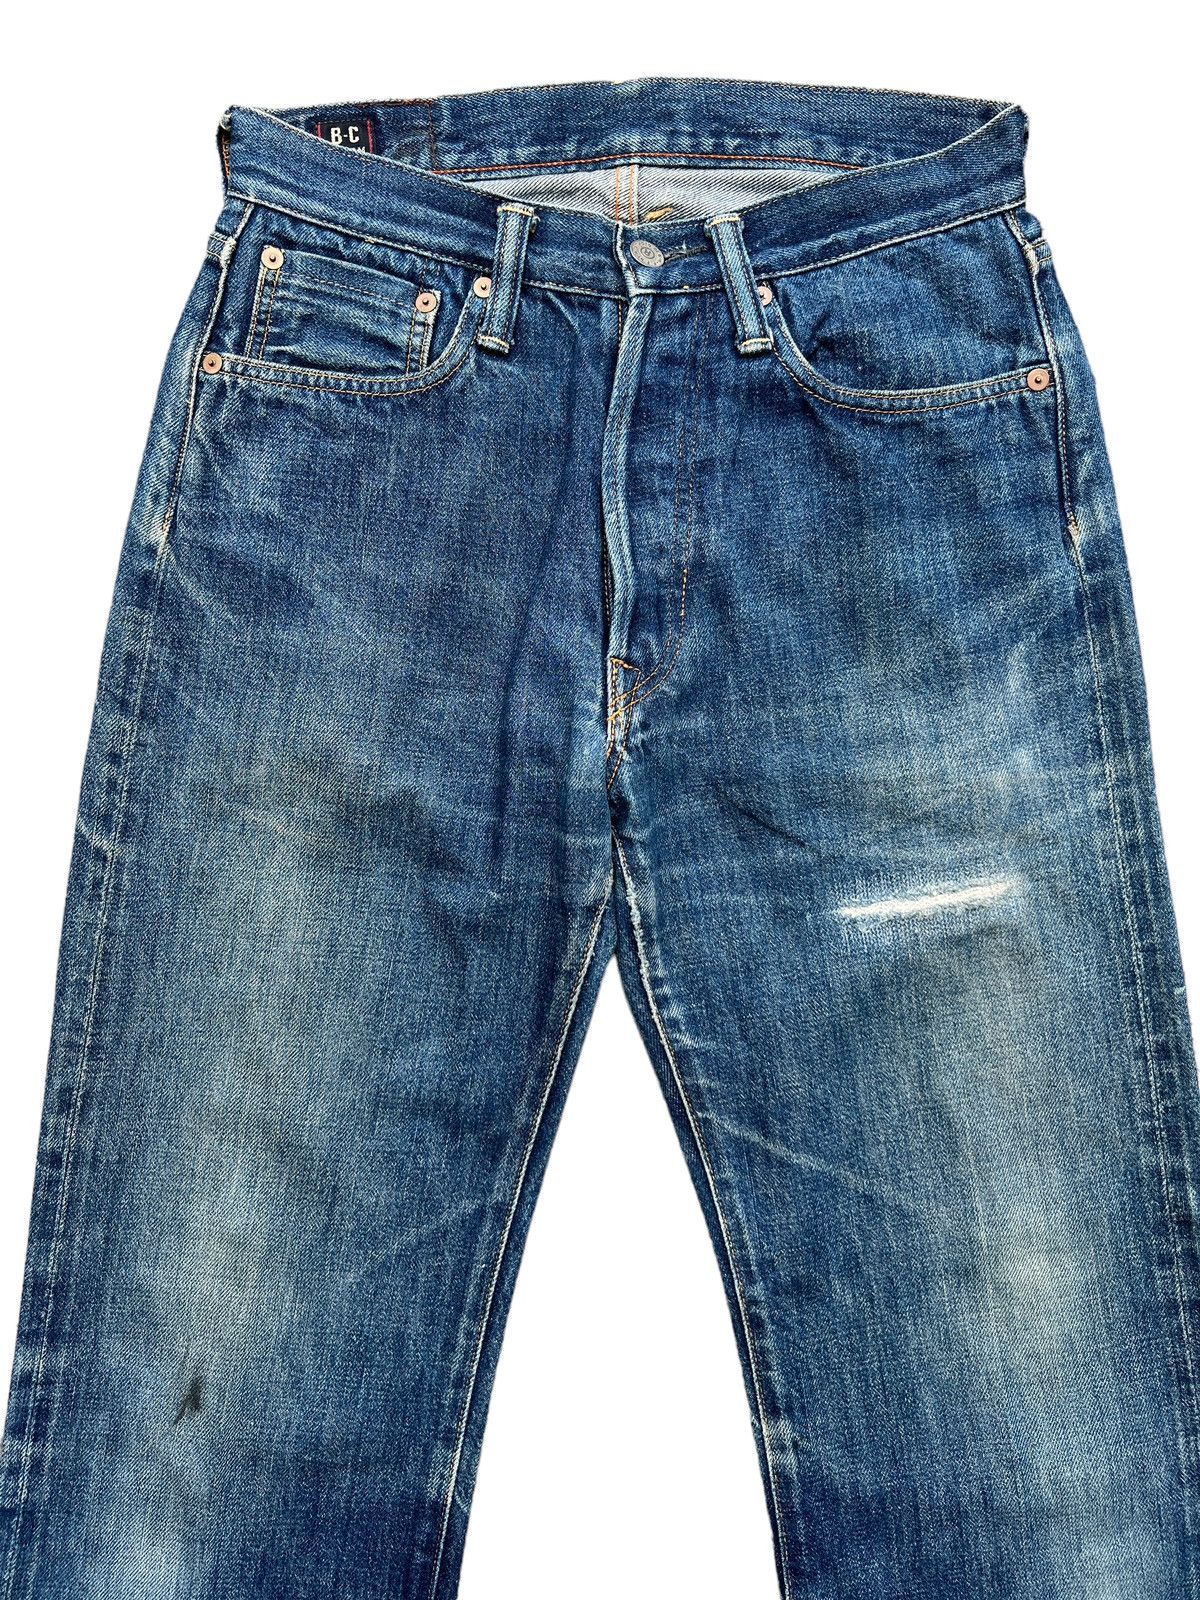 Vintage 45Rpm Selvedge Faded Distressed Denim Jeans 29x29 - 4